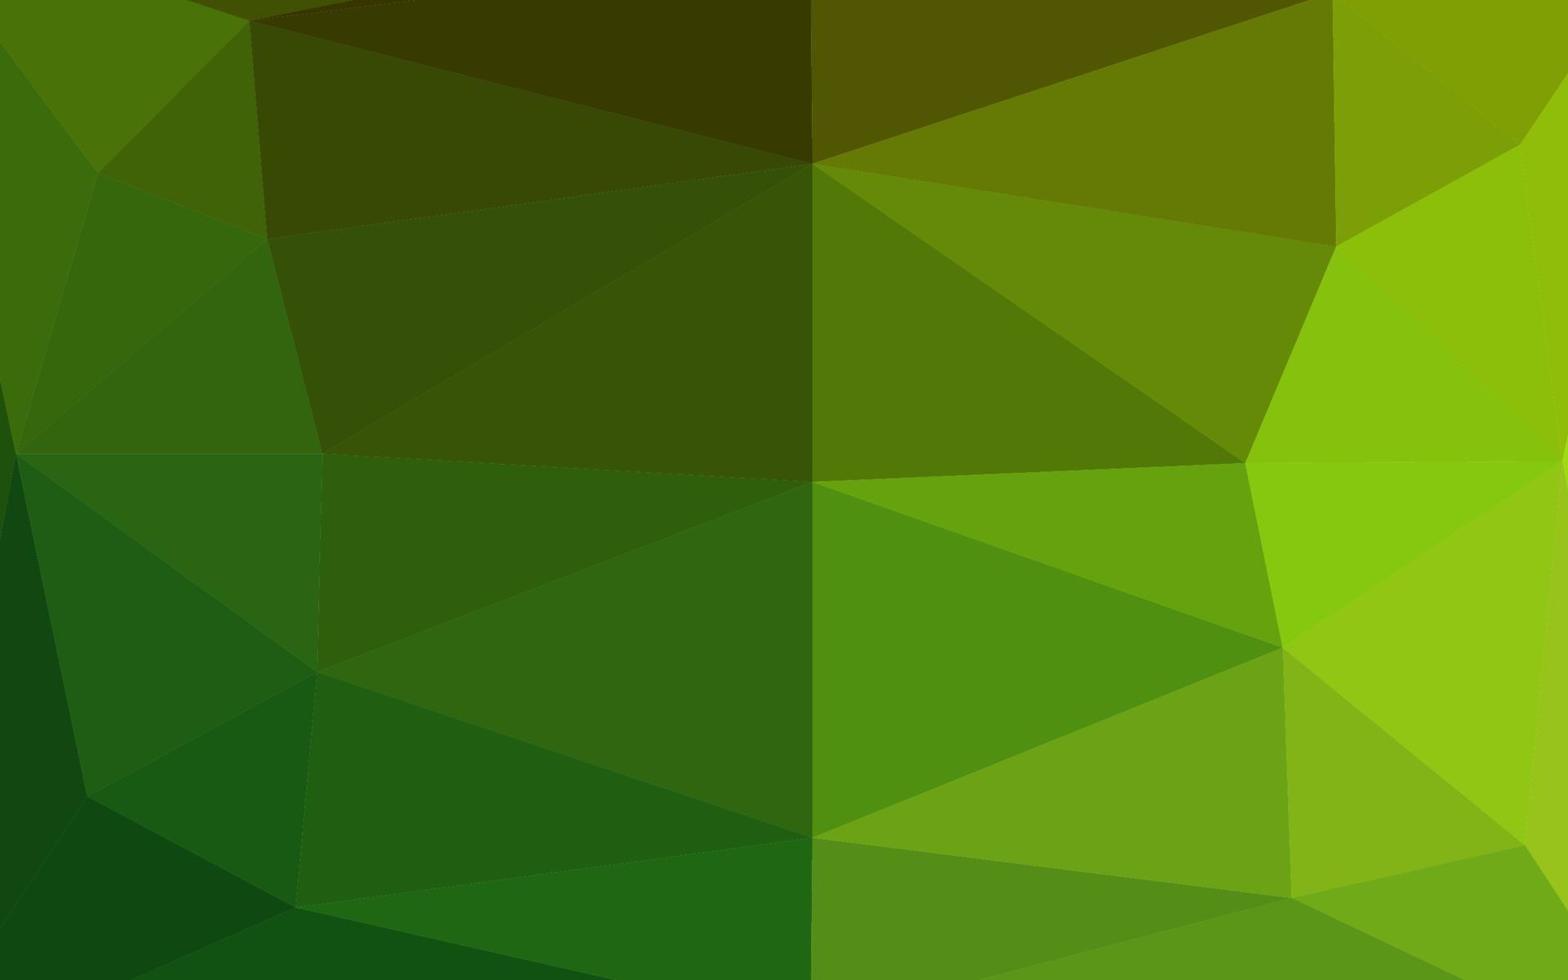 cubierta poligonal abstracta de vector verde claro.